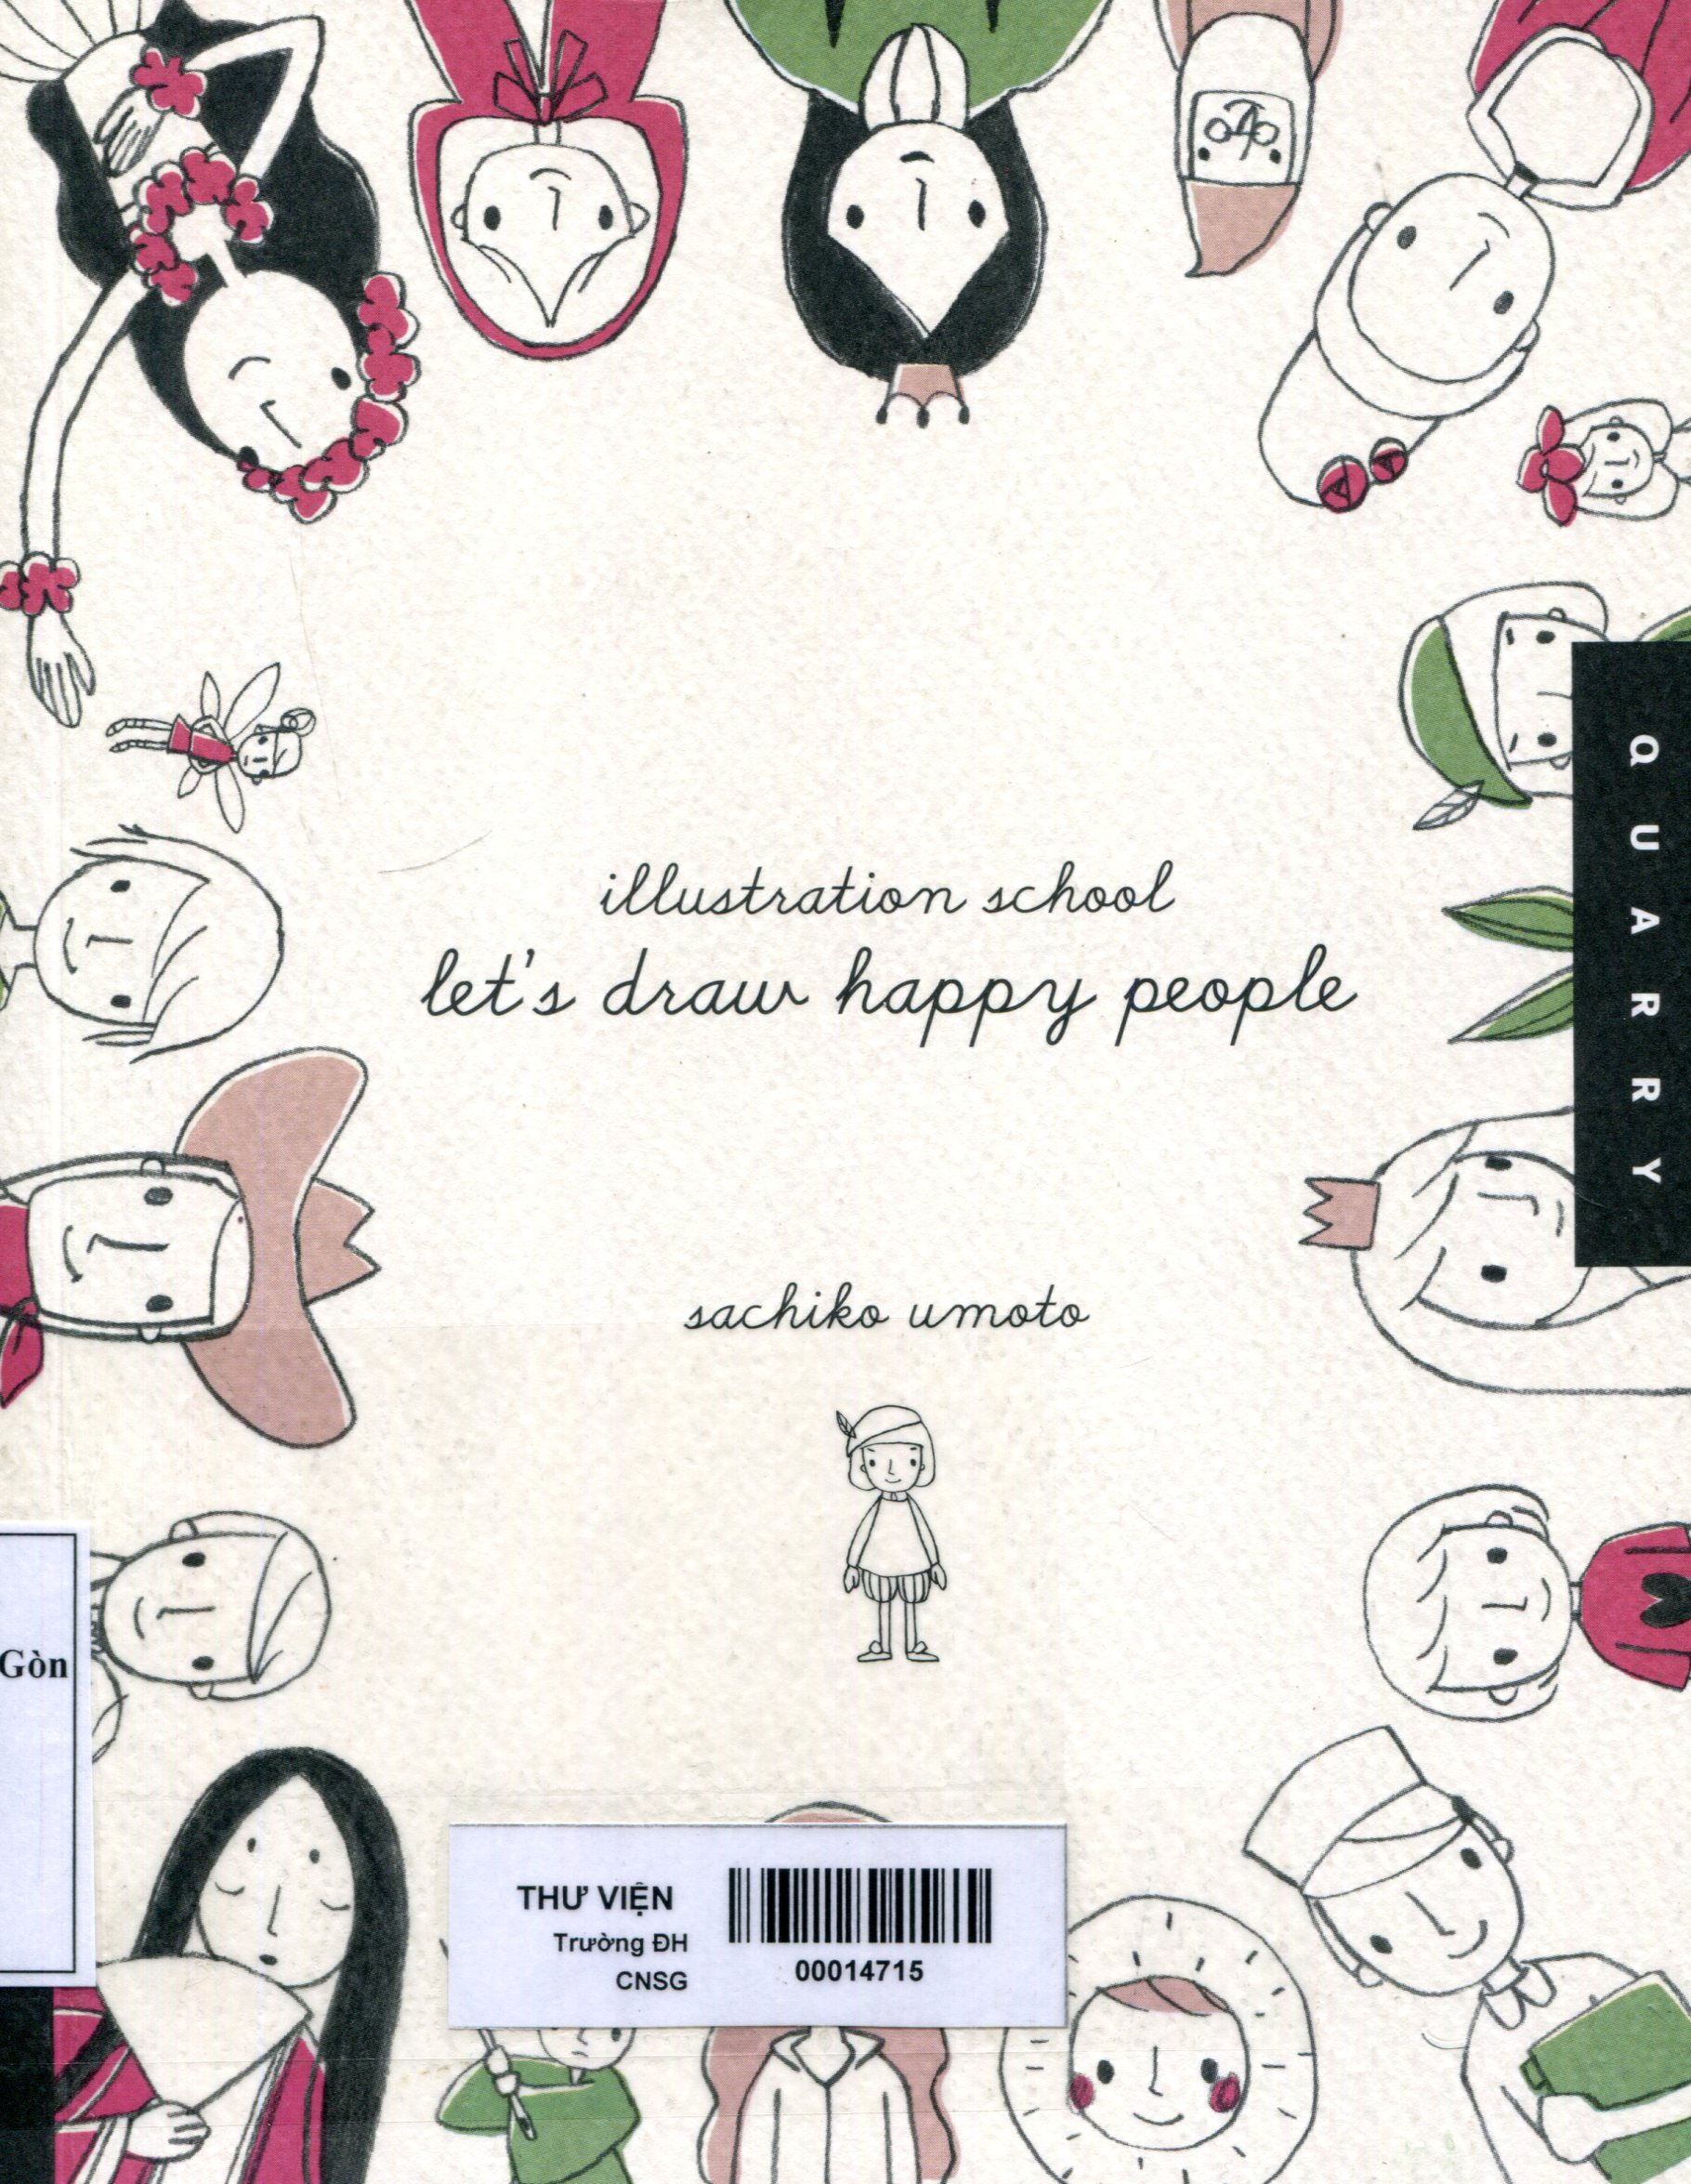 Illustration school: Let's draw happy people